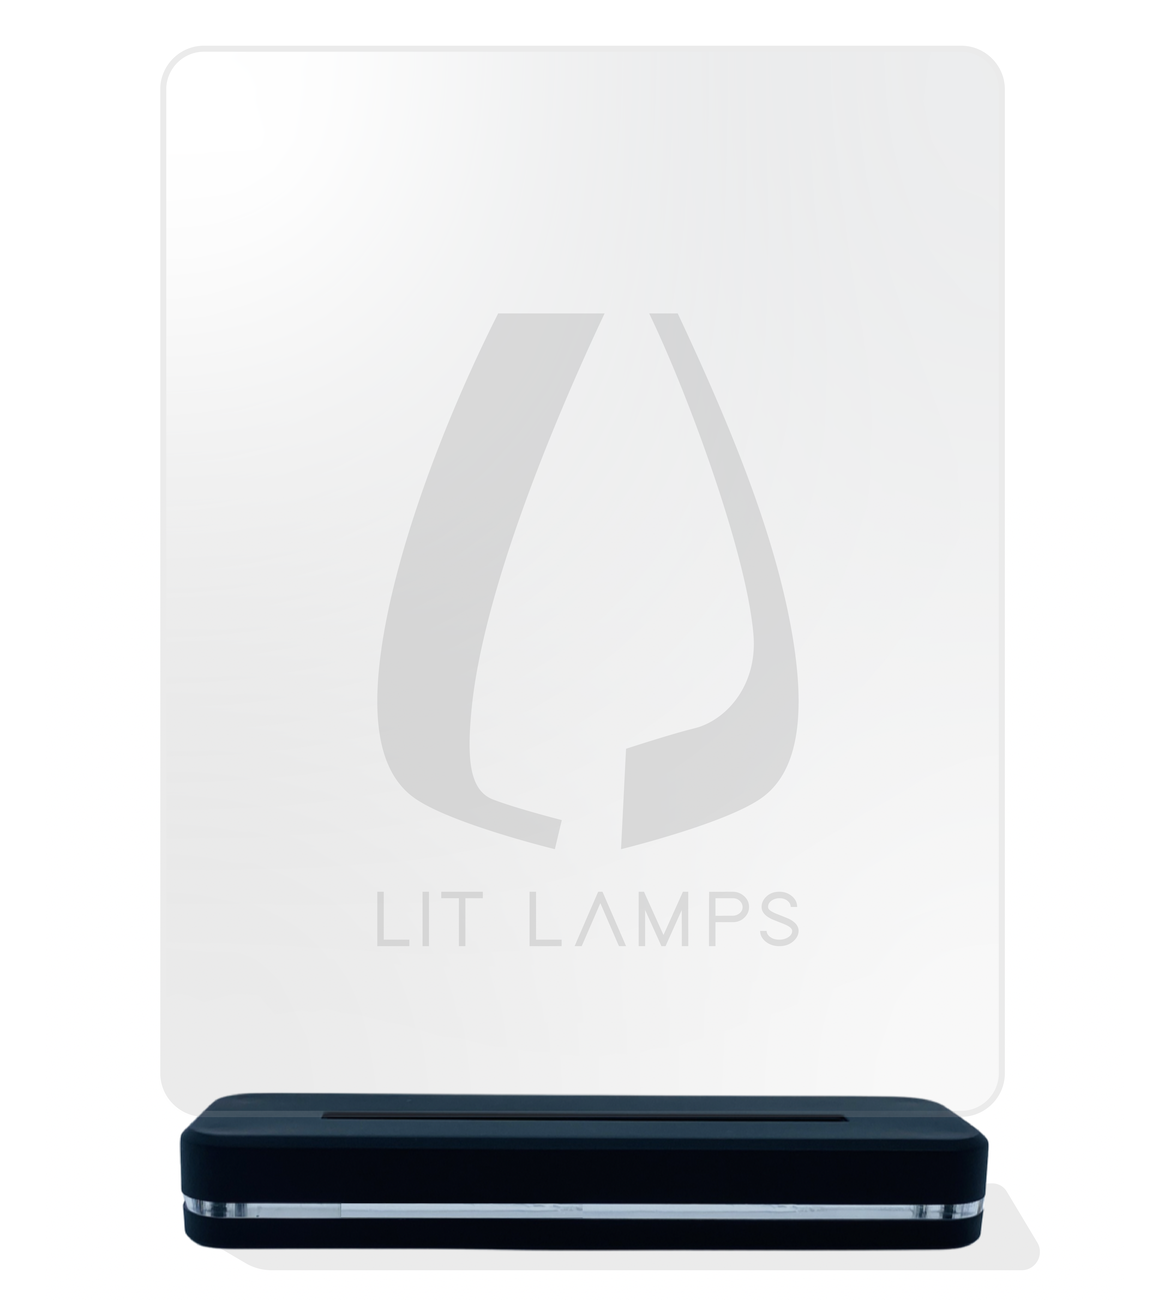 Cybertruck - Tesla Aesthetic Table LIT 3D Illusion Lamp - LIT Lamps - Cybertruck 3D LED Lamp-3d Lamps